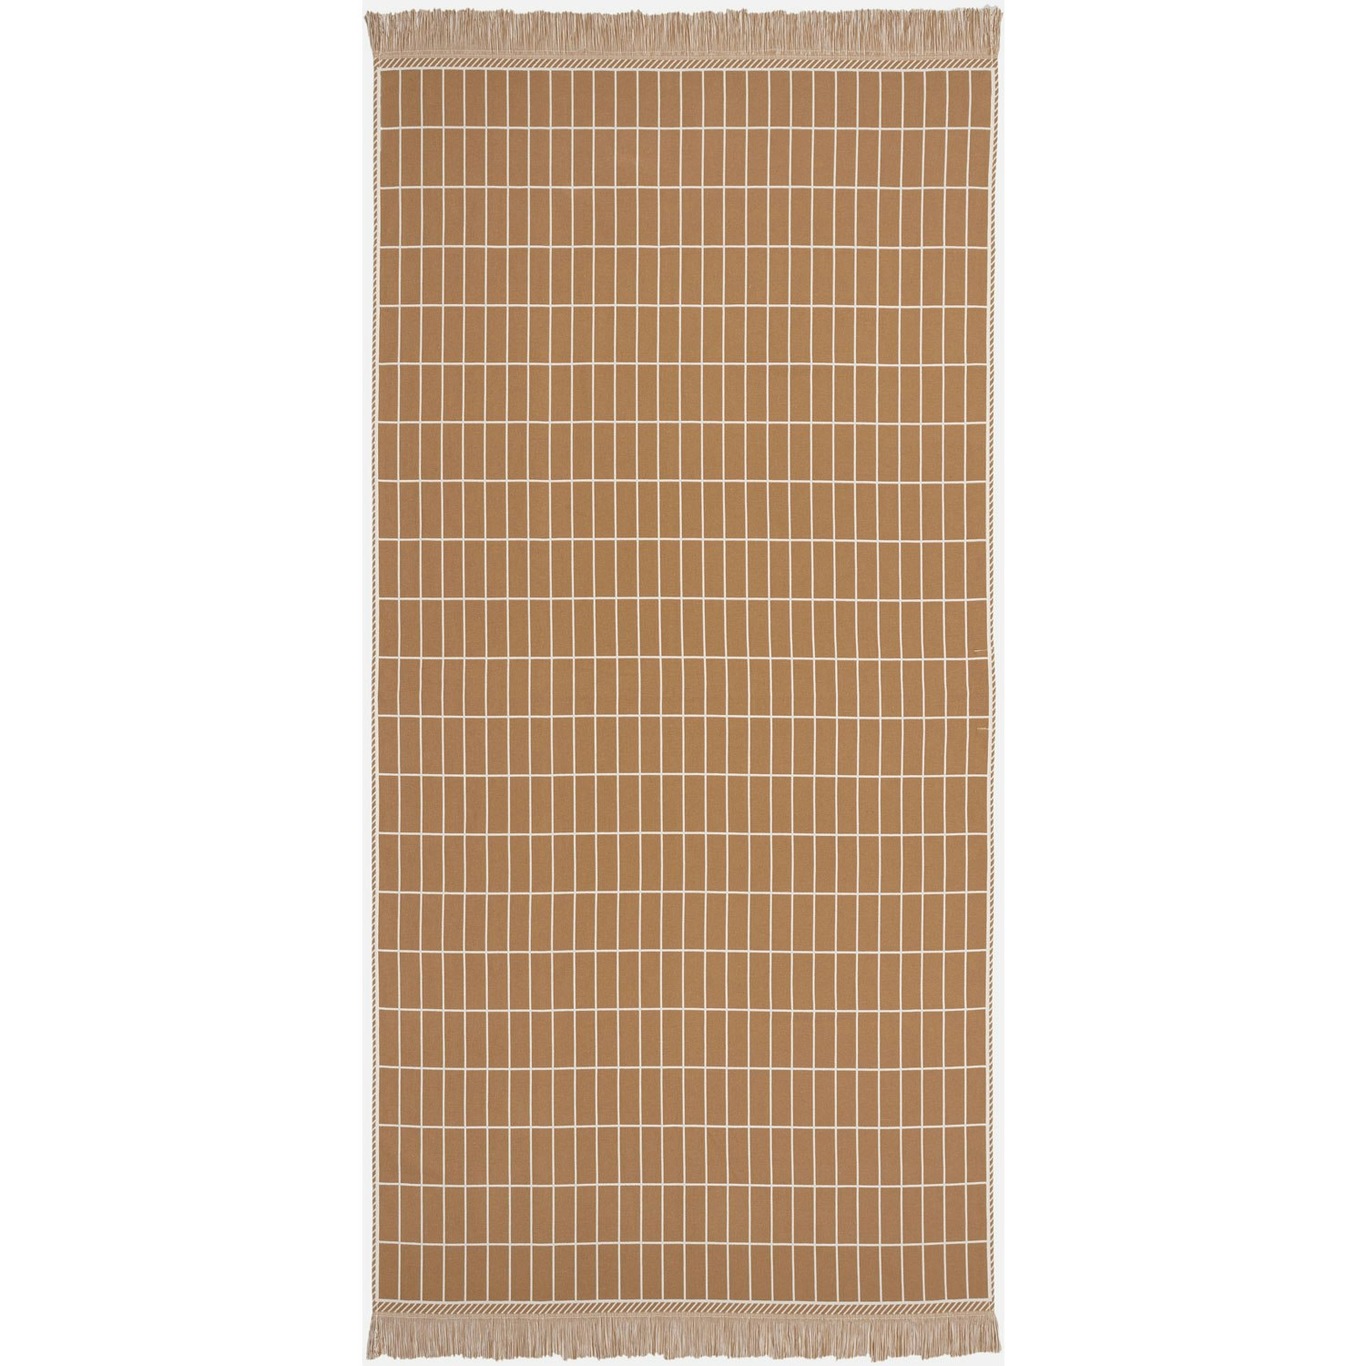 Pieni Tiiliskivi Håndklæde Hamam Brunt / Offwhite, 70x150 cm